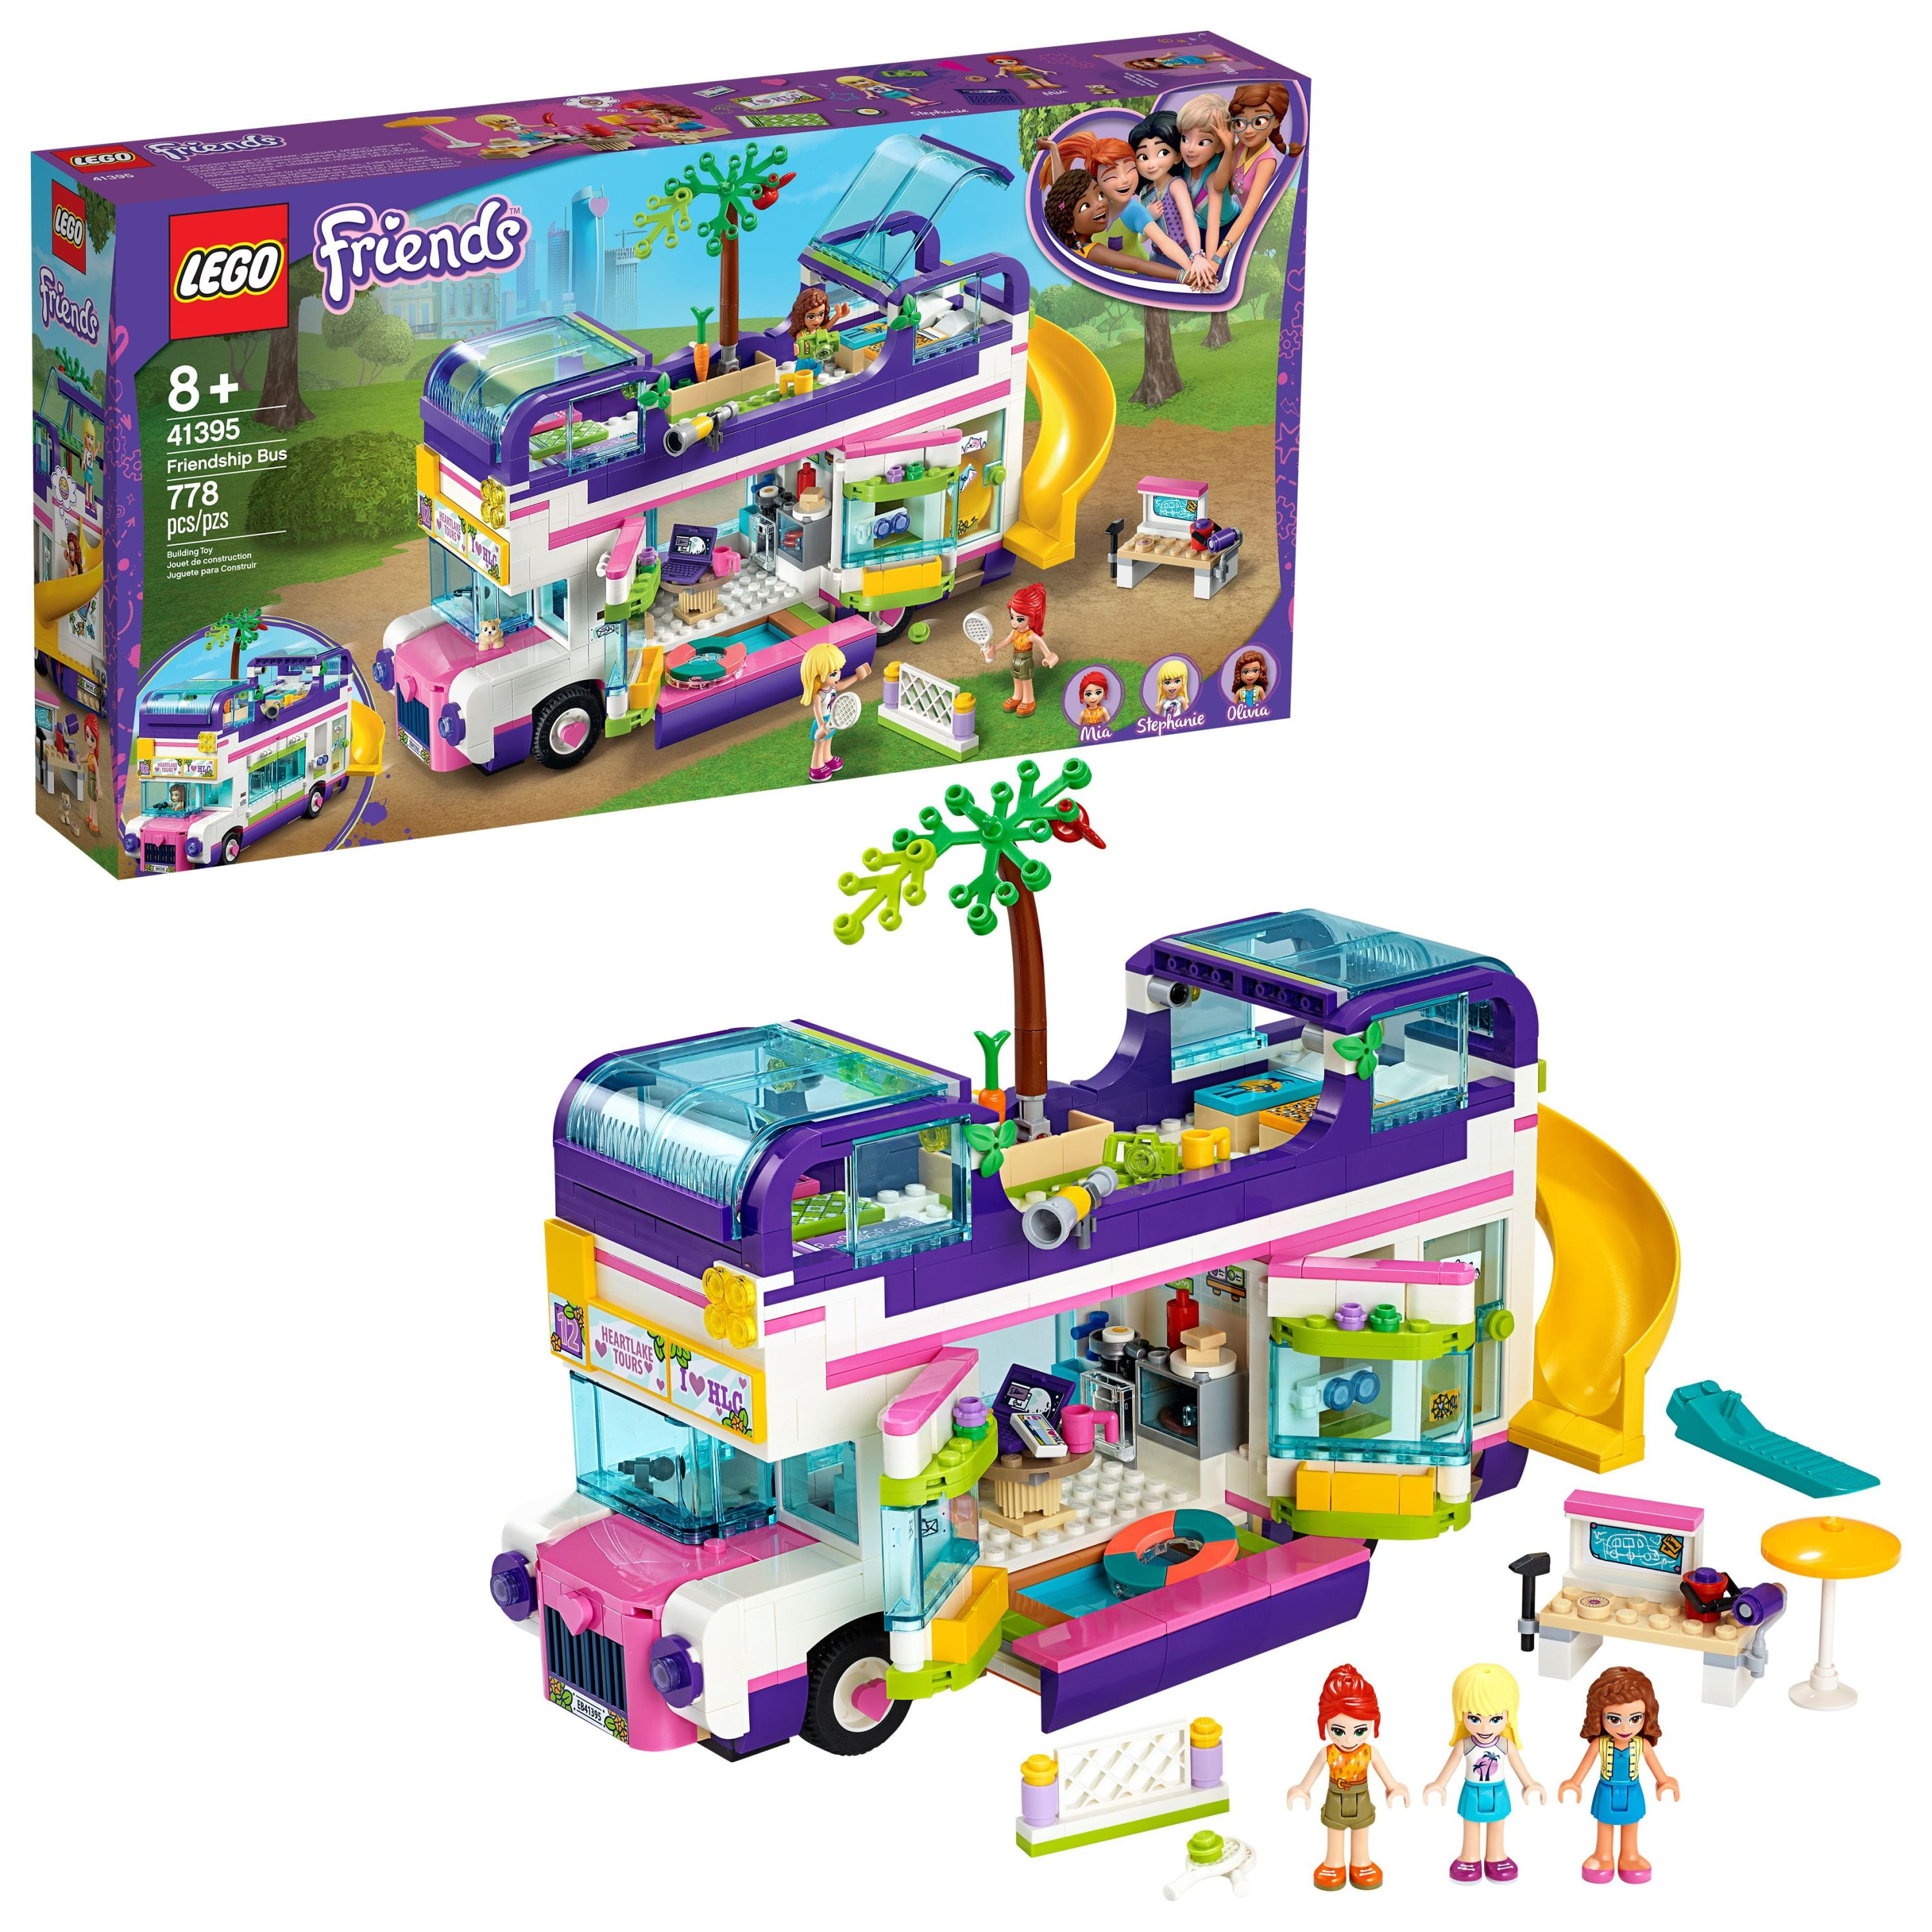 prins usund hård LEGO Friends Friendship Bus 41395 LEGO Heartlake City Toy Playset (778  Pieces) - Walmart.com